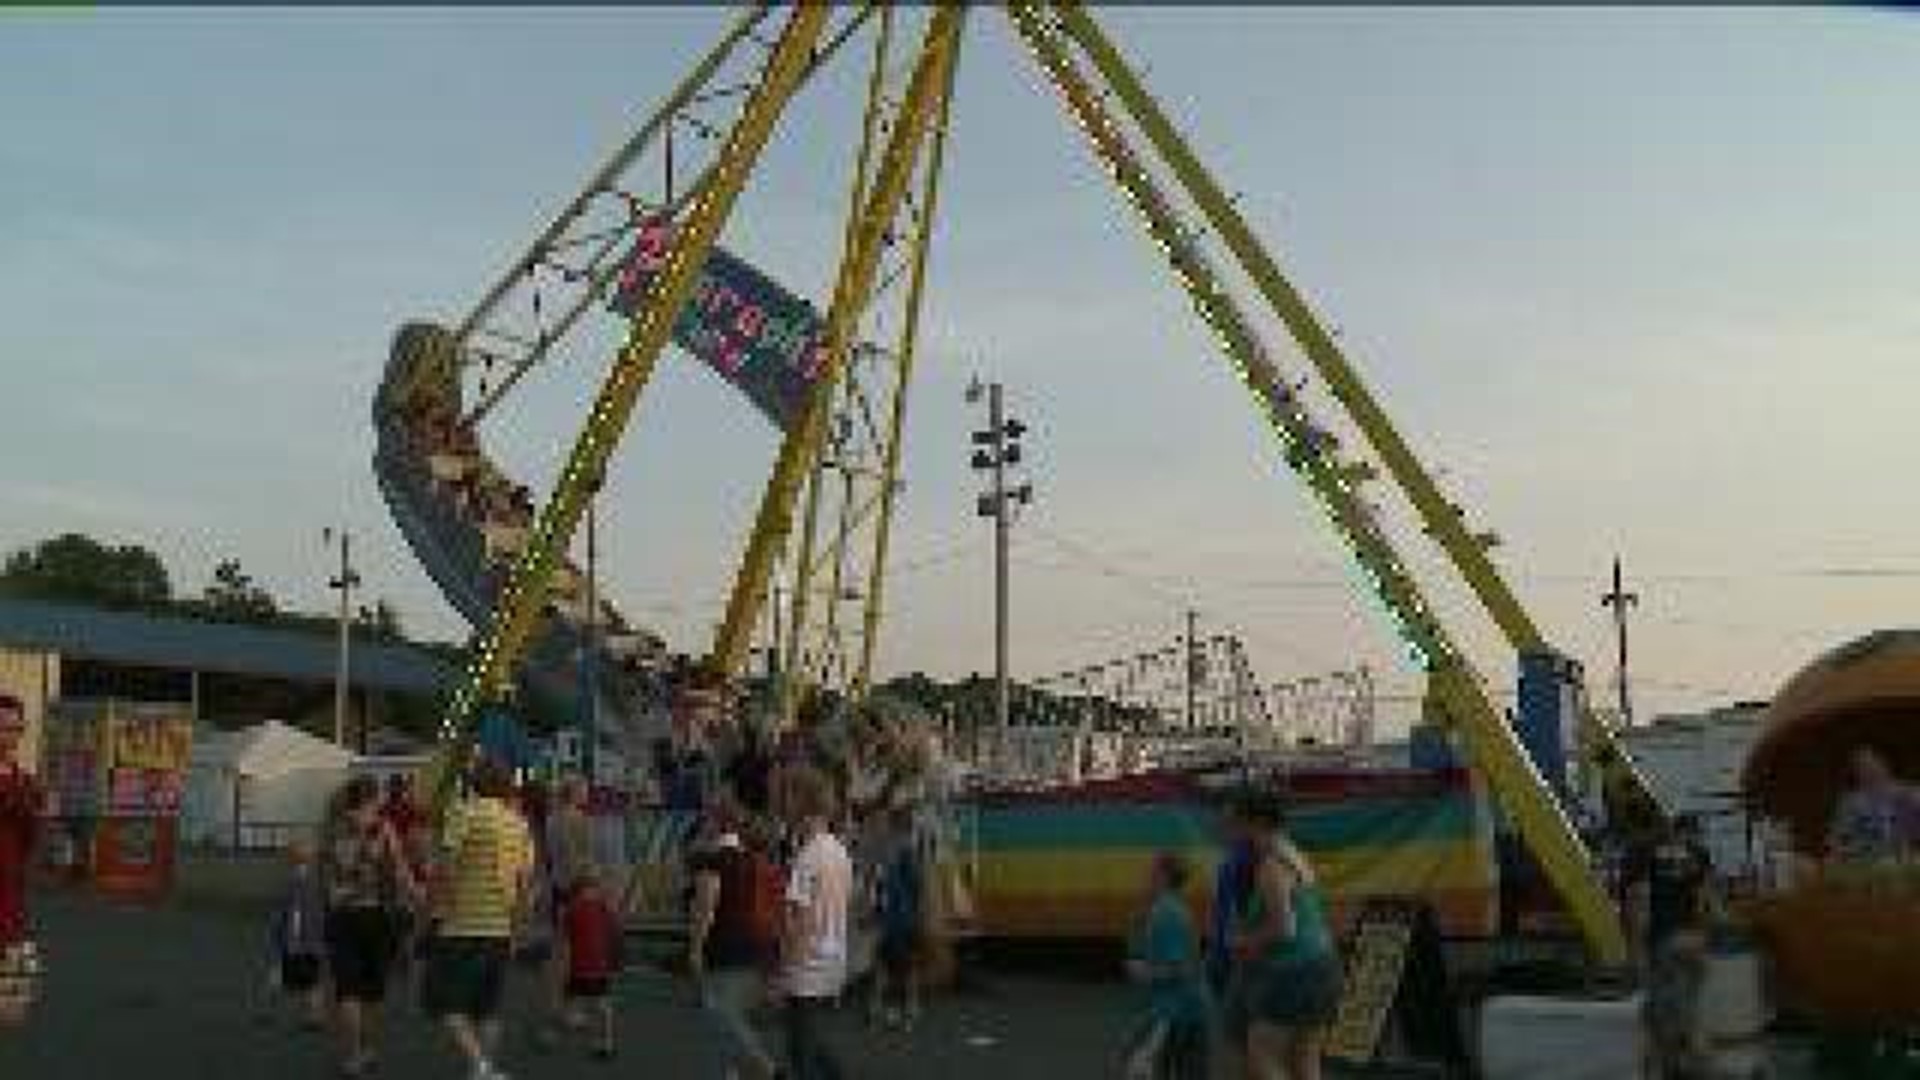 Northeast Fair Kicks off Season of Fun